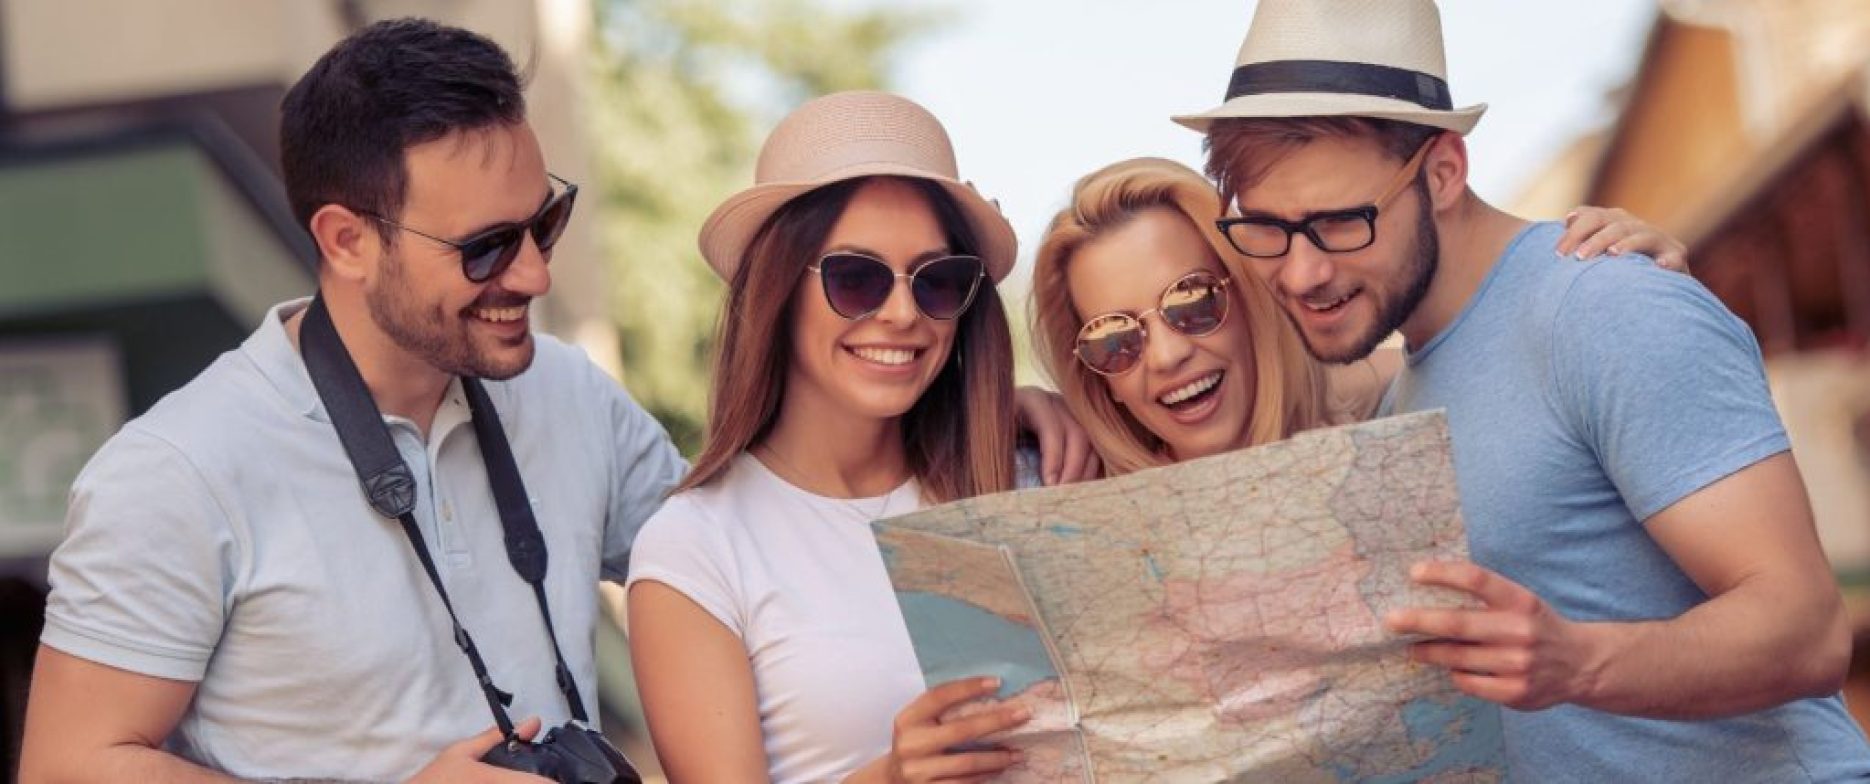 Estrategias de Marketing de turismo para tu negocio